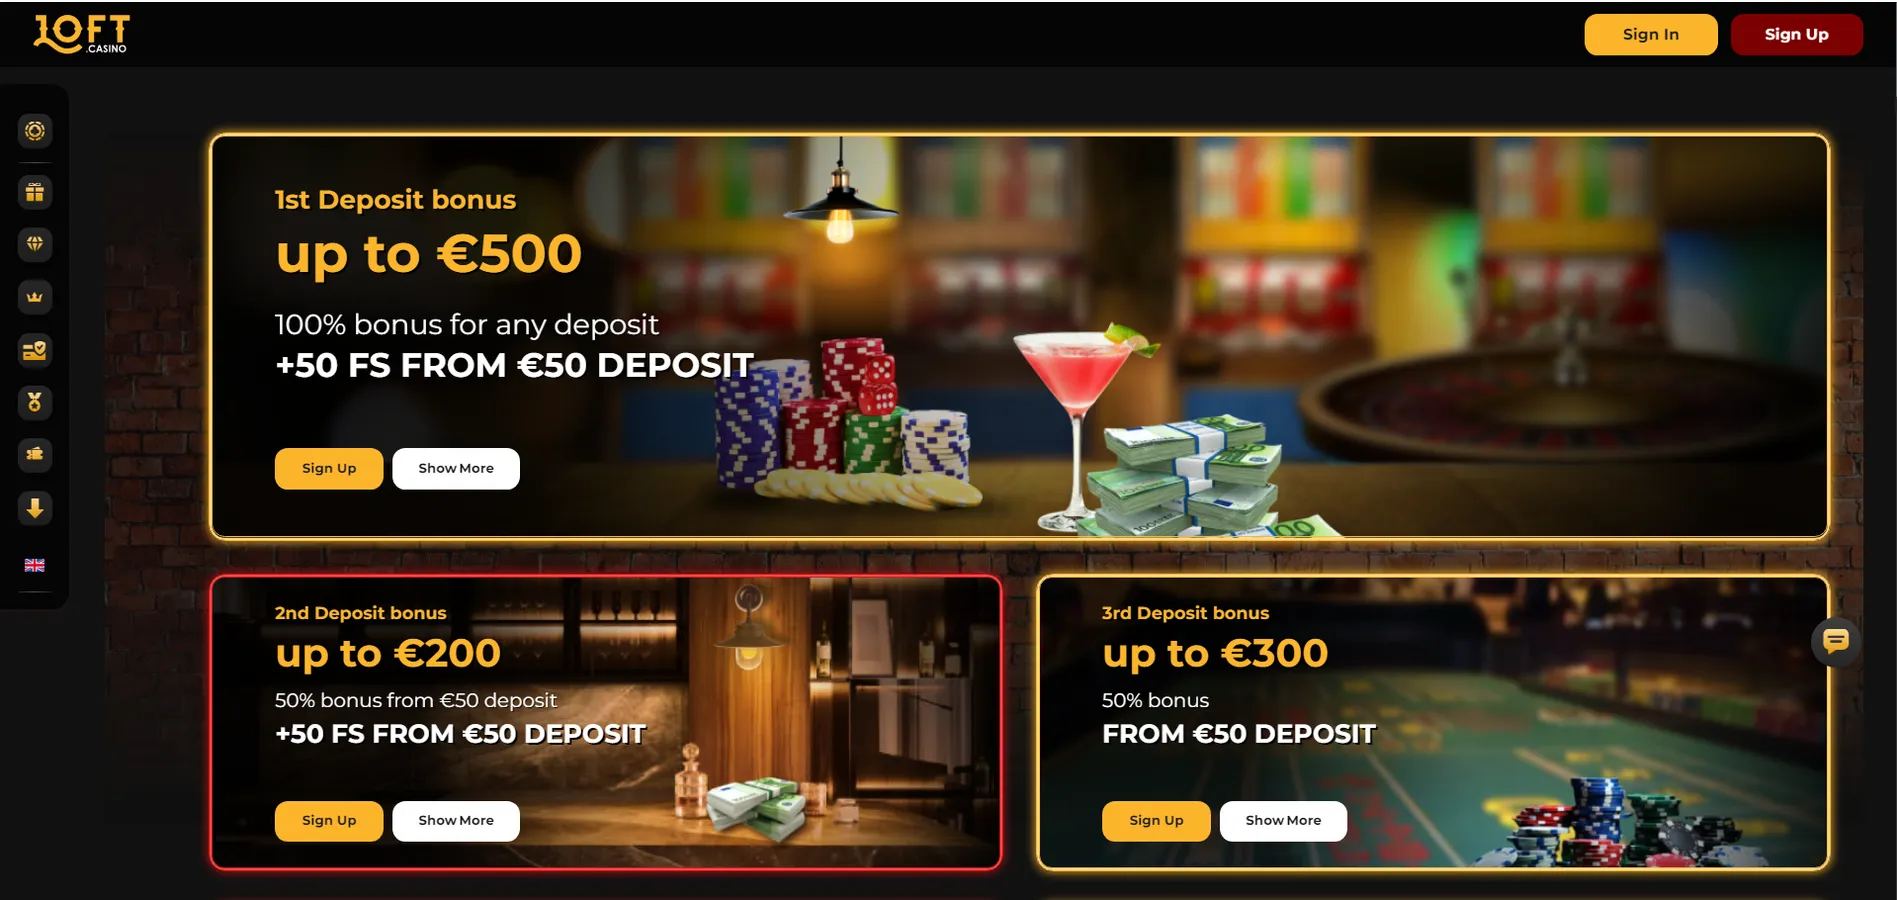 Loft Casino Welcome Bonus